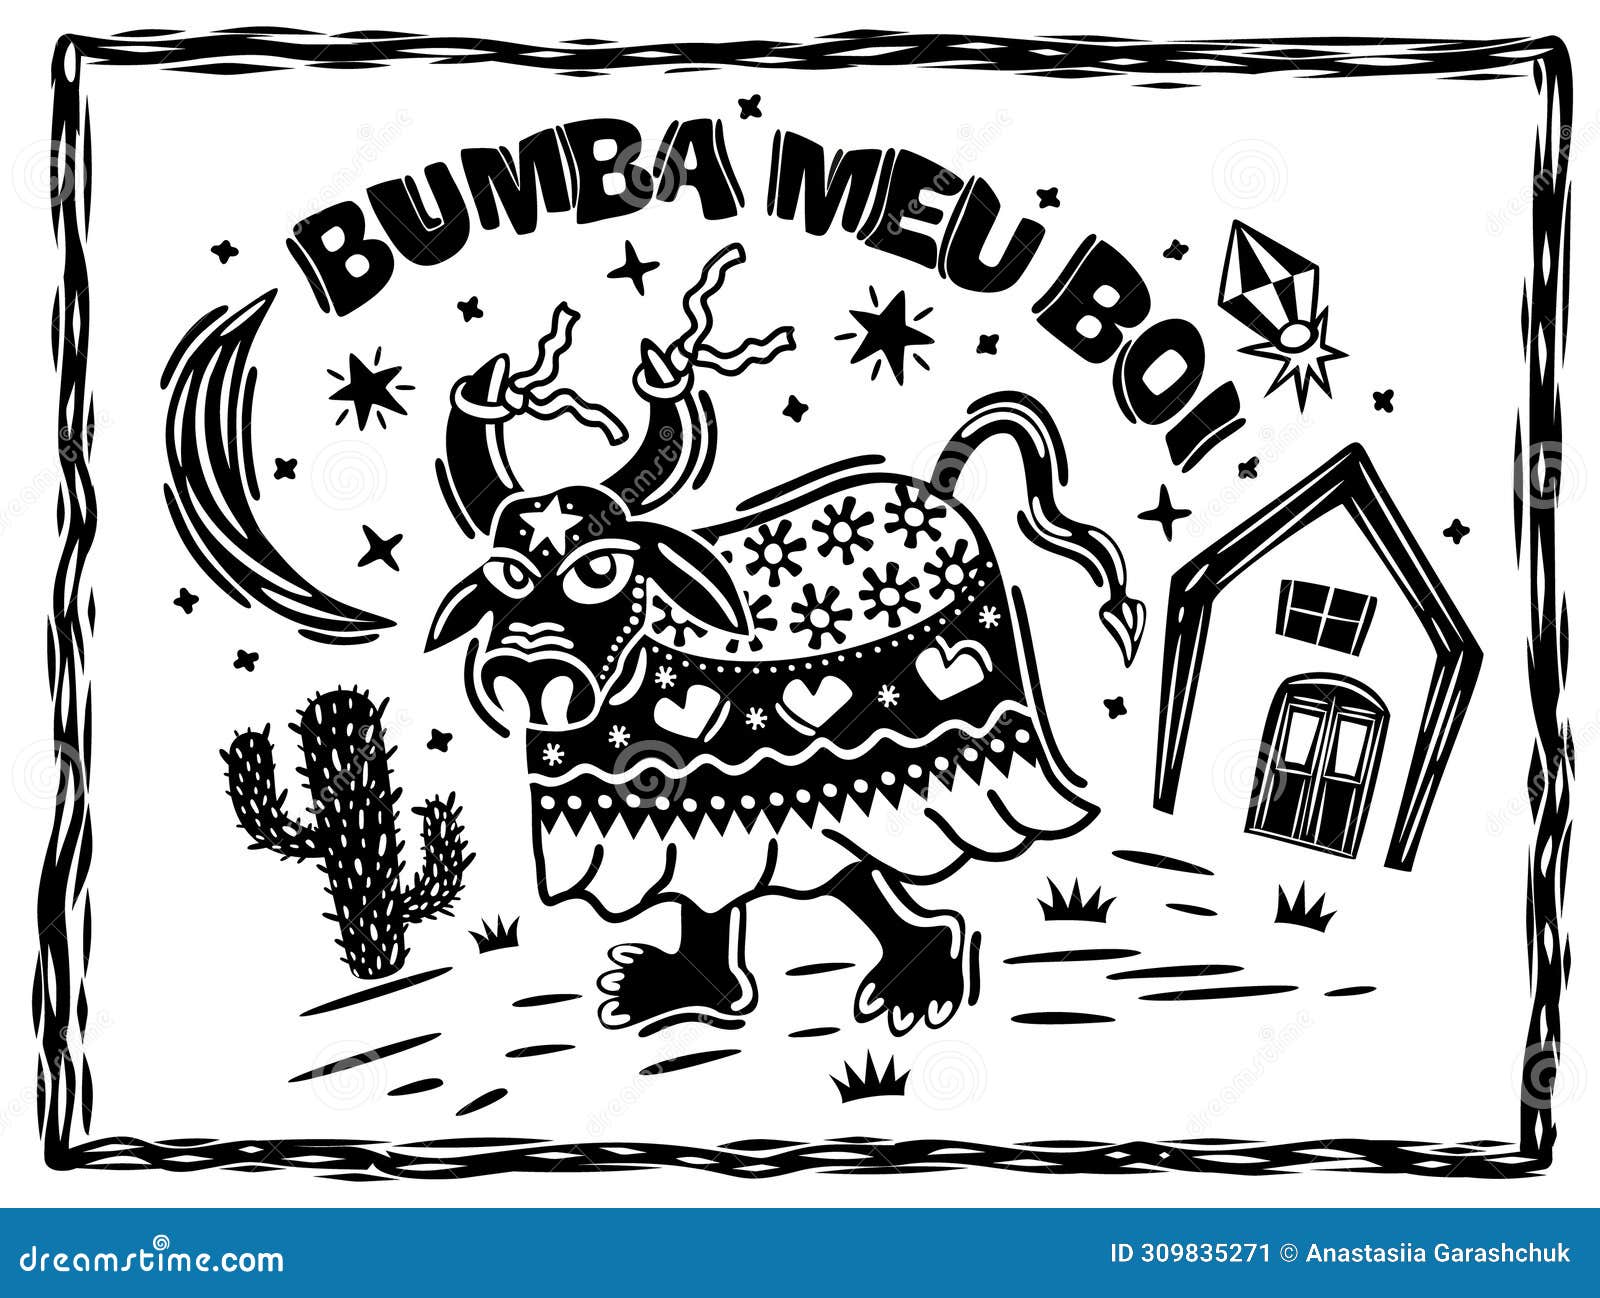 bumba meu boi. traditional folk dance from north-eastern brazil. cordel woodcut 